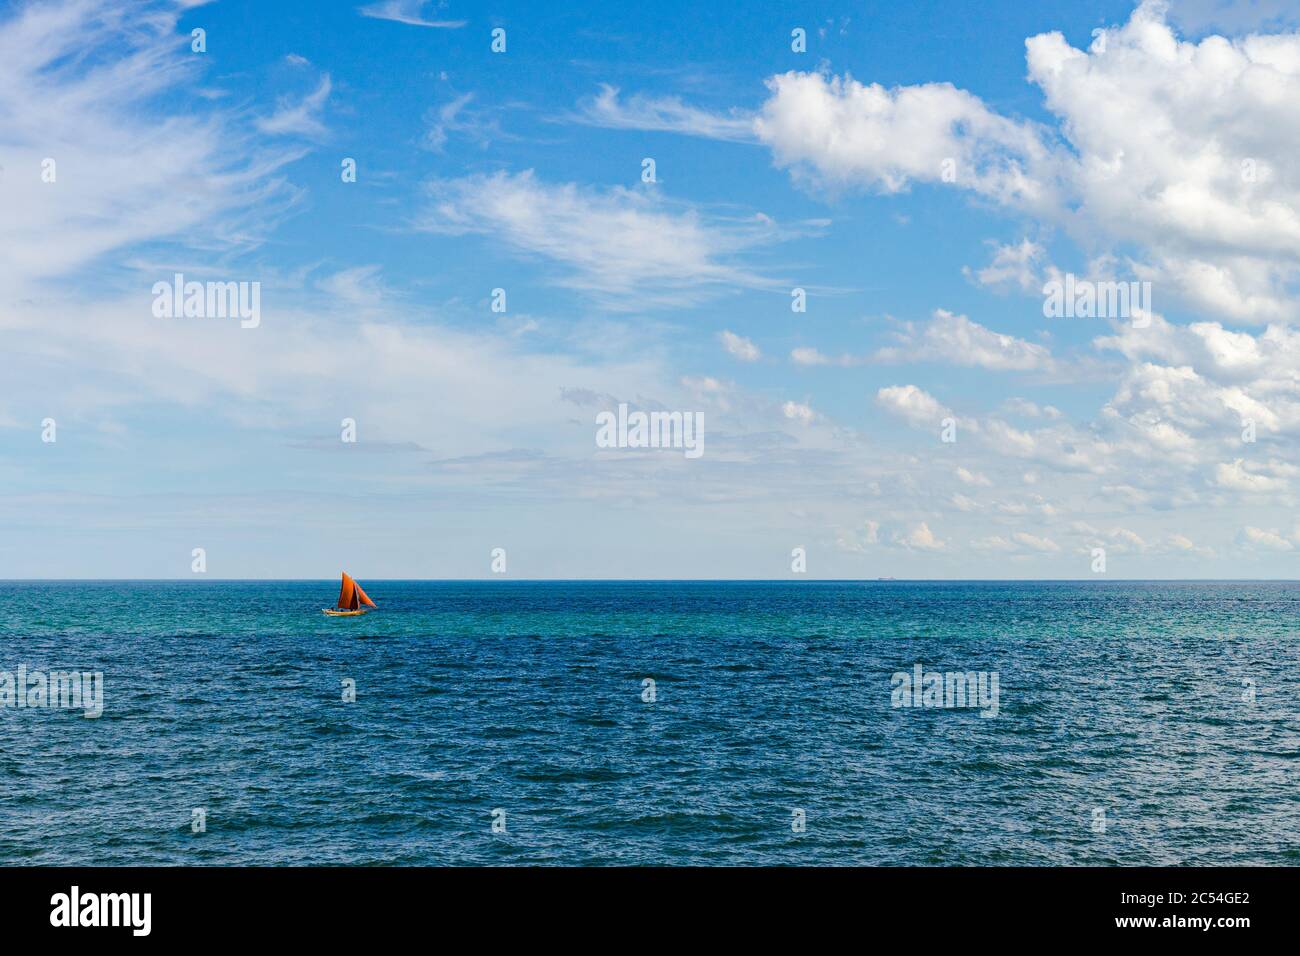 Sailboat on horizon Stock Photo